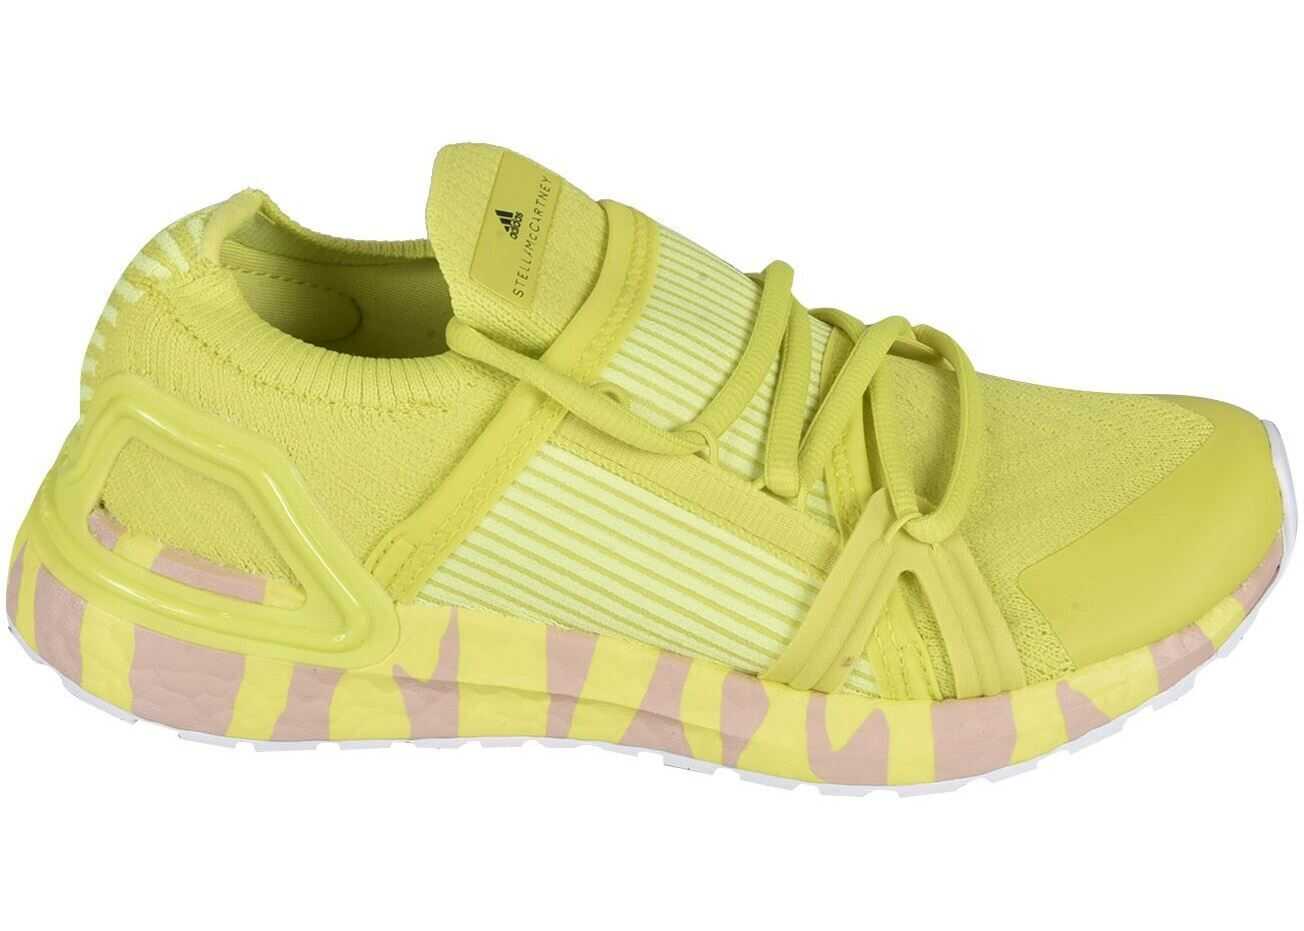 adidas by Stella McCartney Ultraboost 20 Sneakers In Acid Yellow FX1958 Yellow